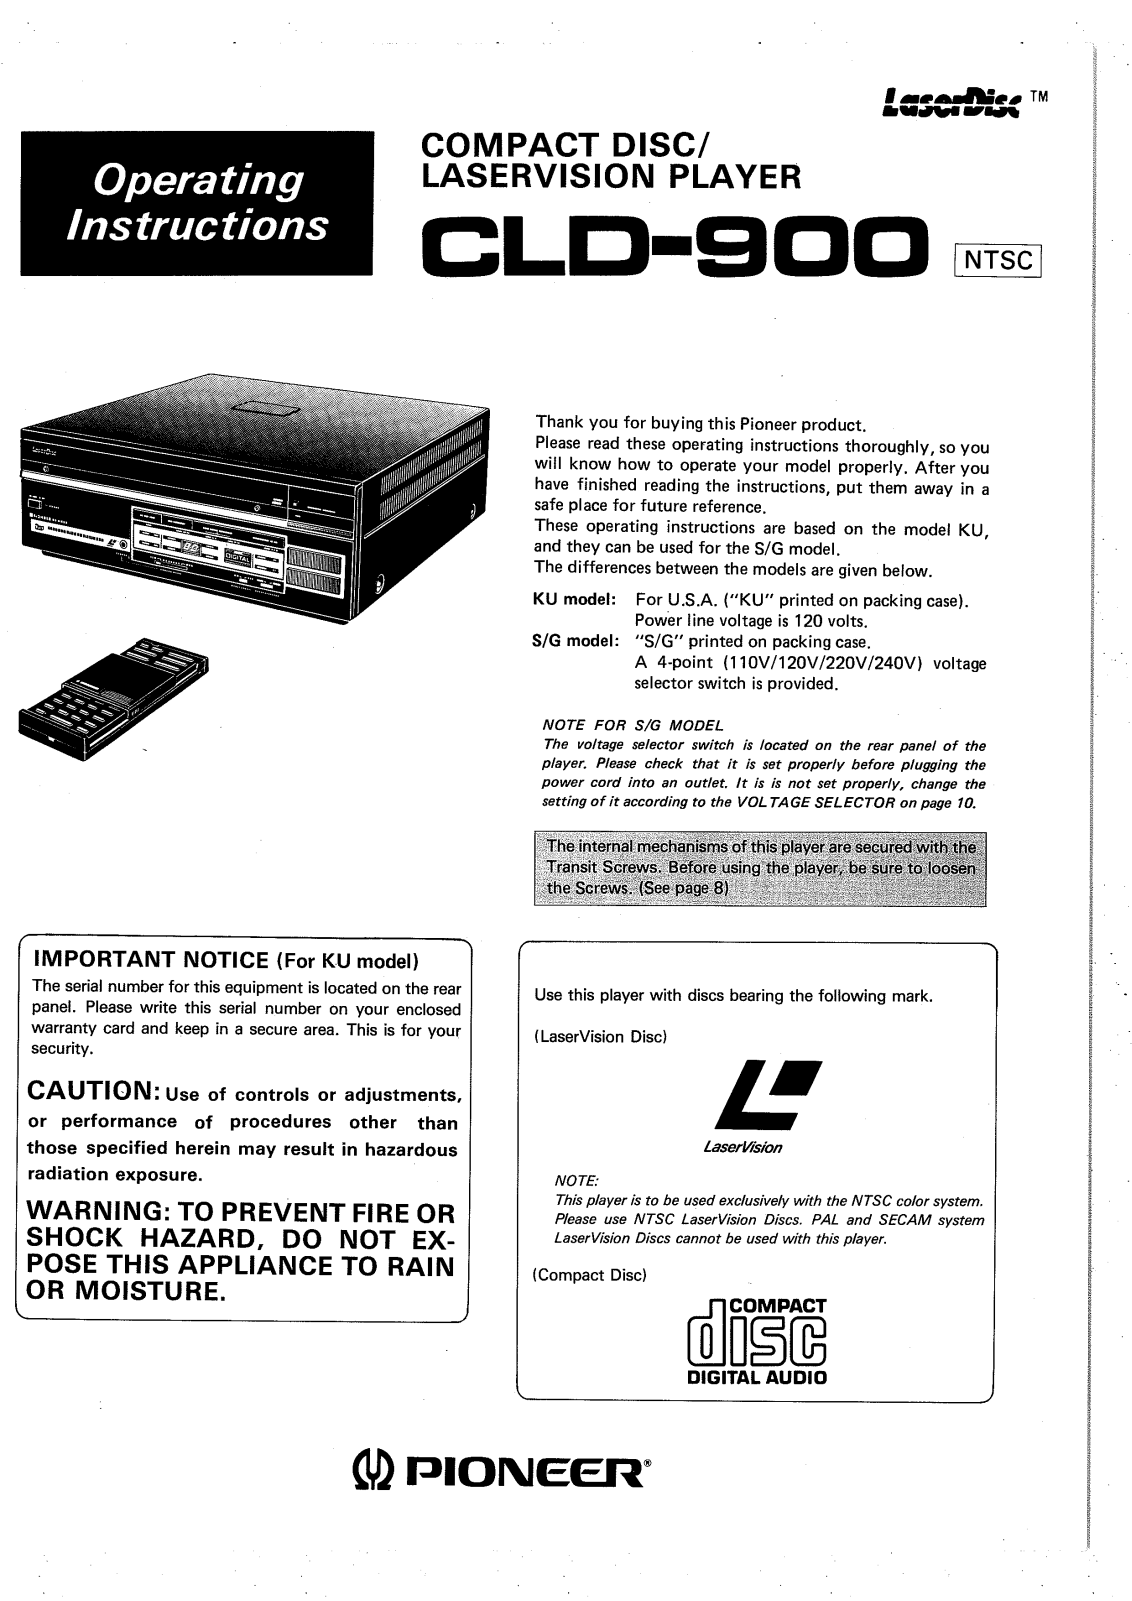 Pioneer CLD-900 Manual